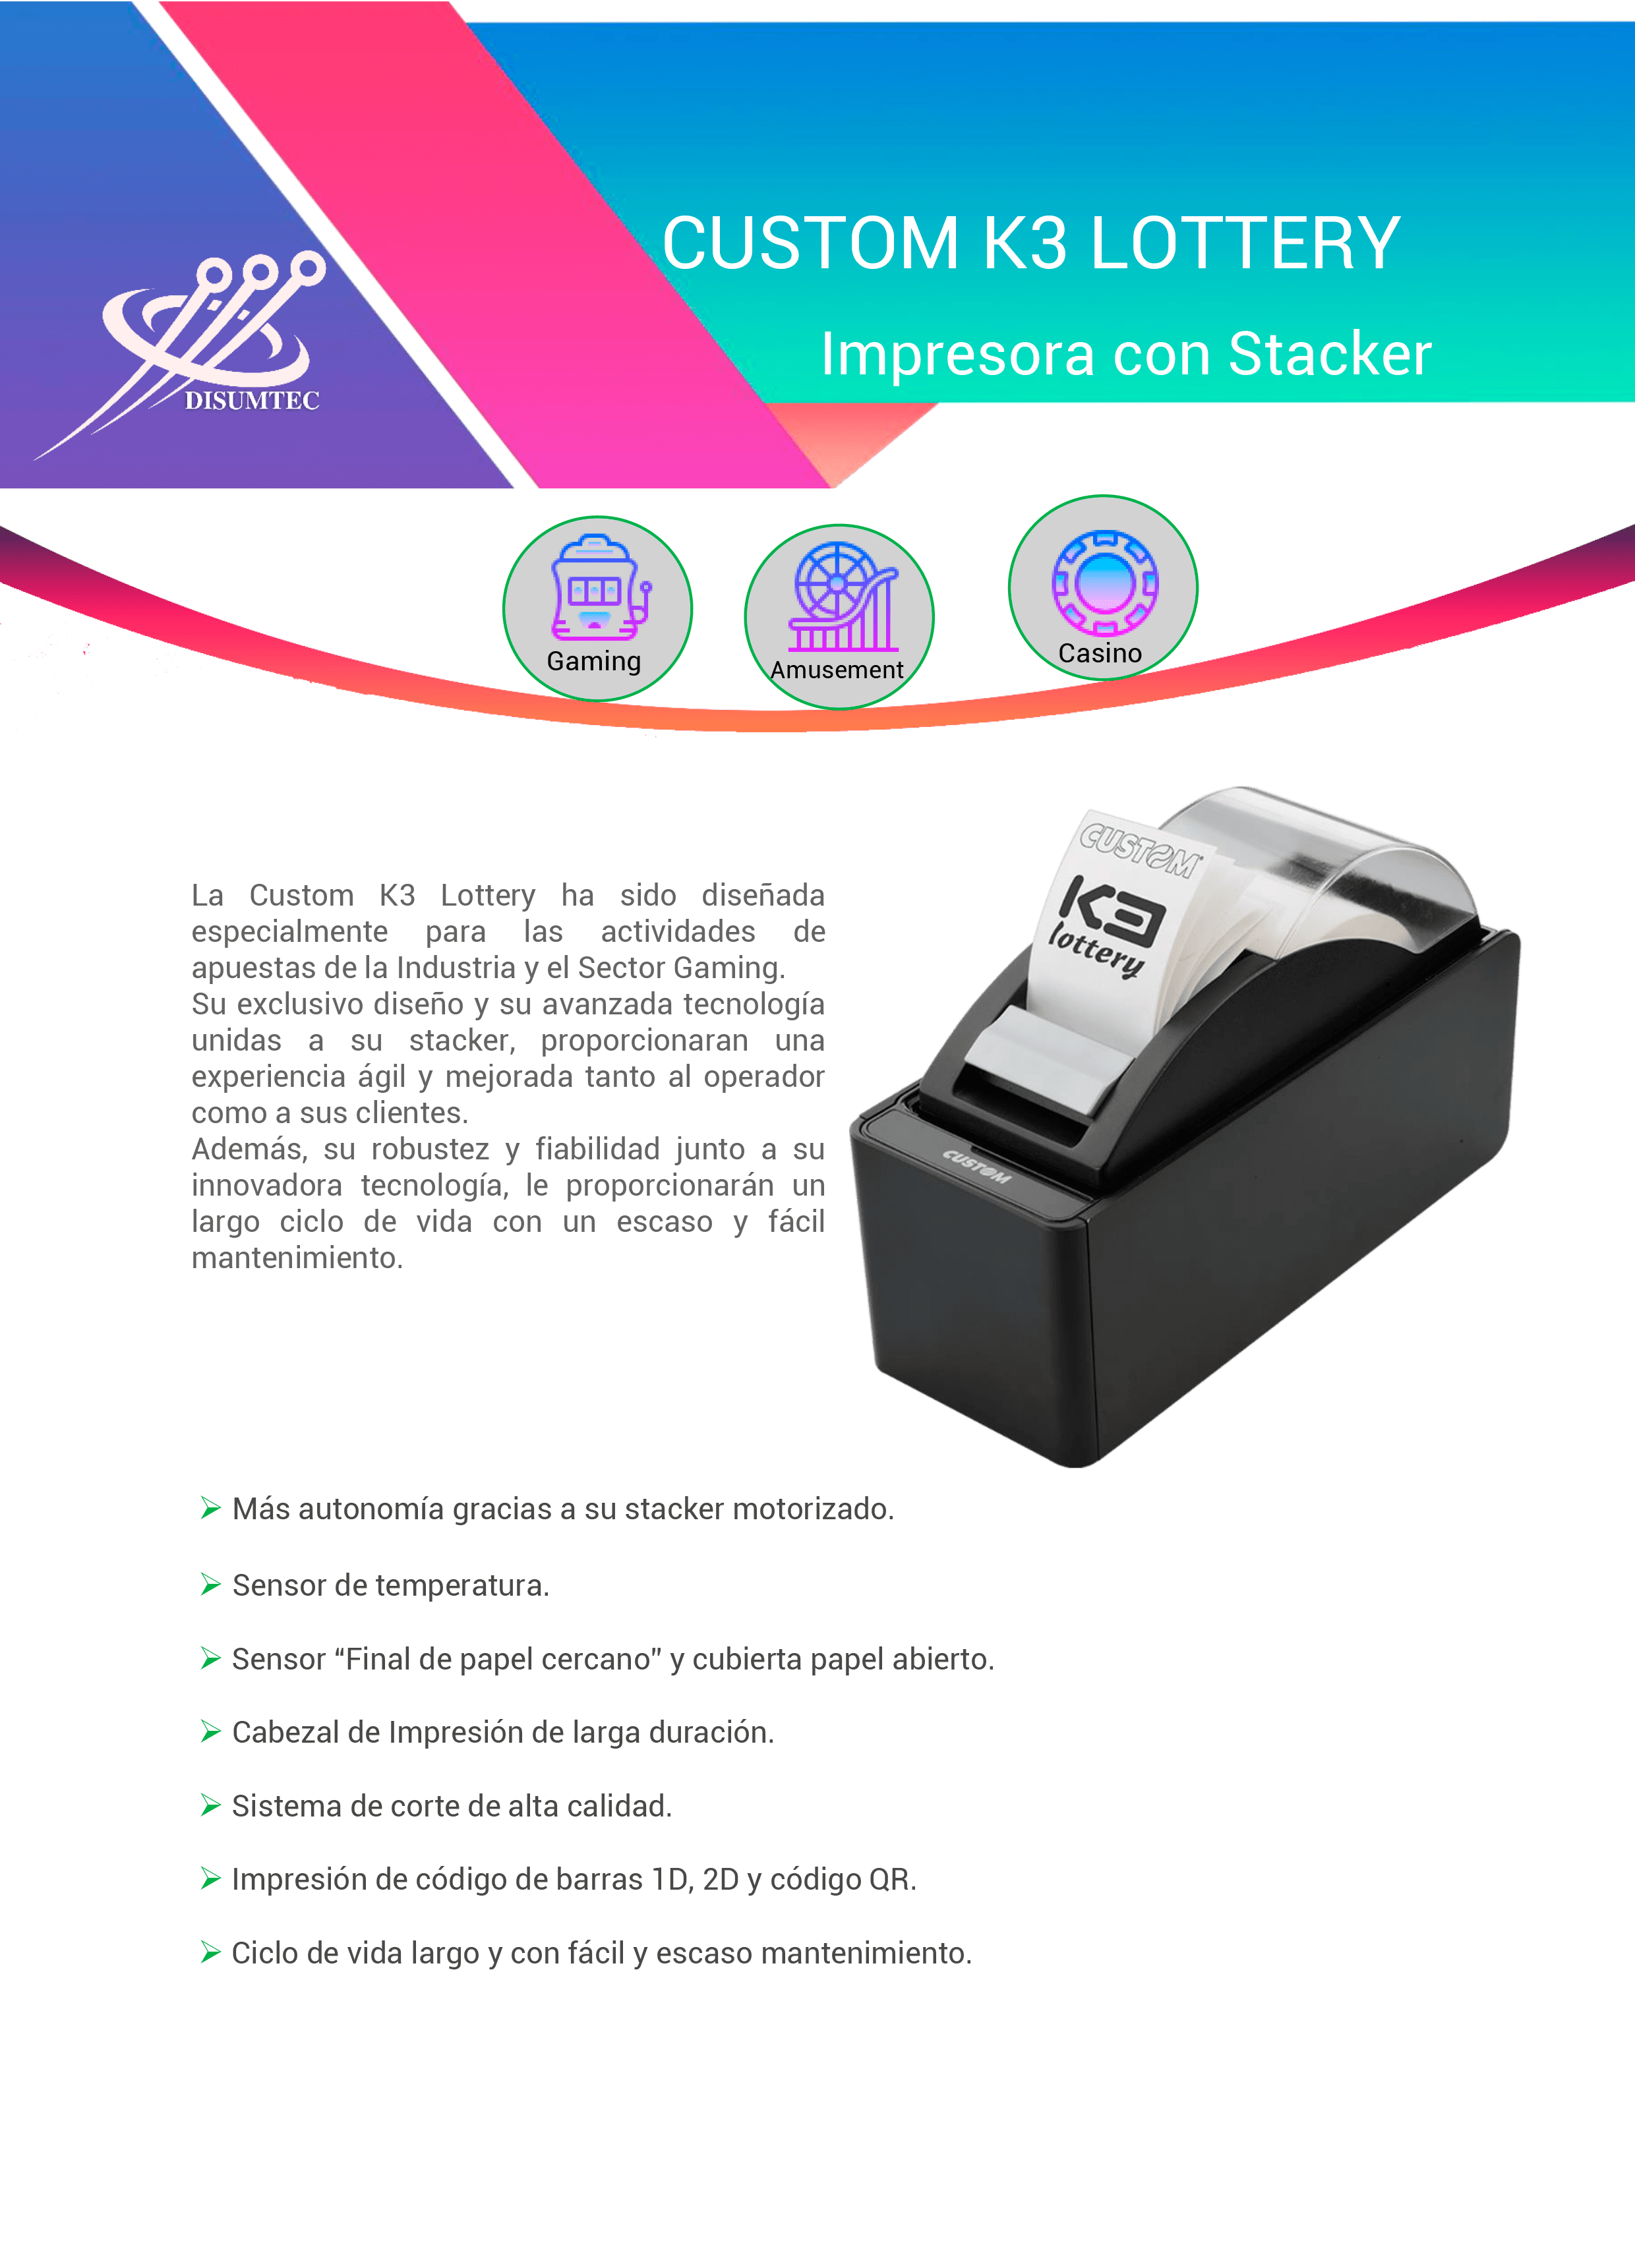 Impresora CUSTOM K3 LOTTERY distribuida por DISUMTEC